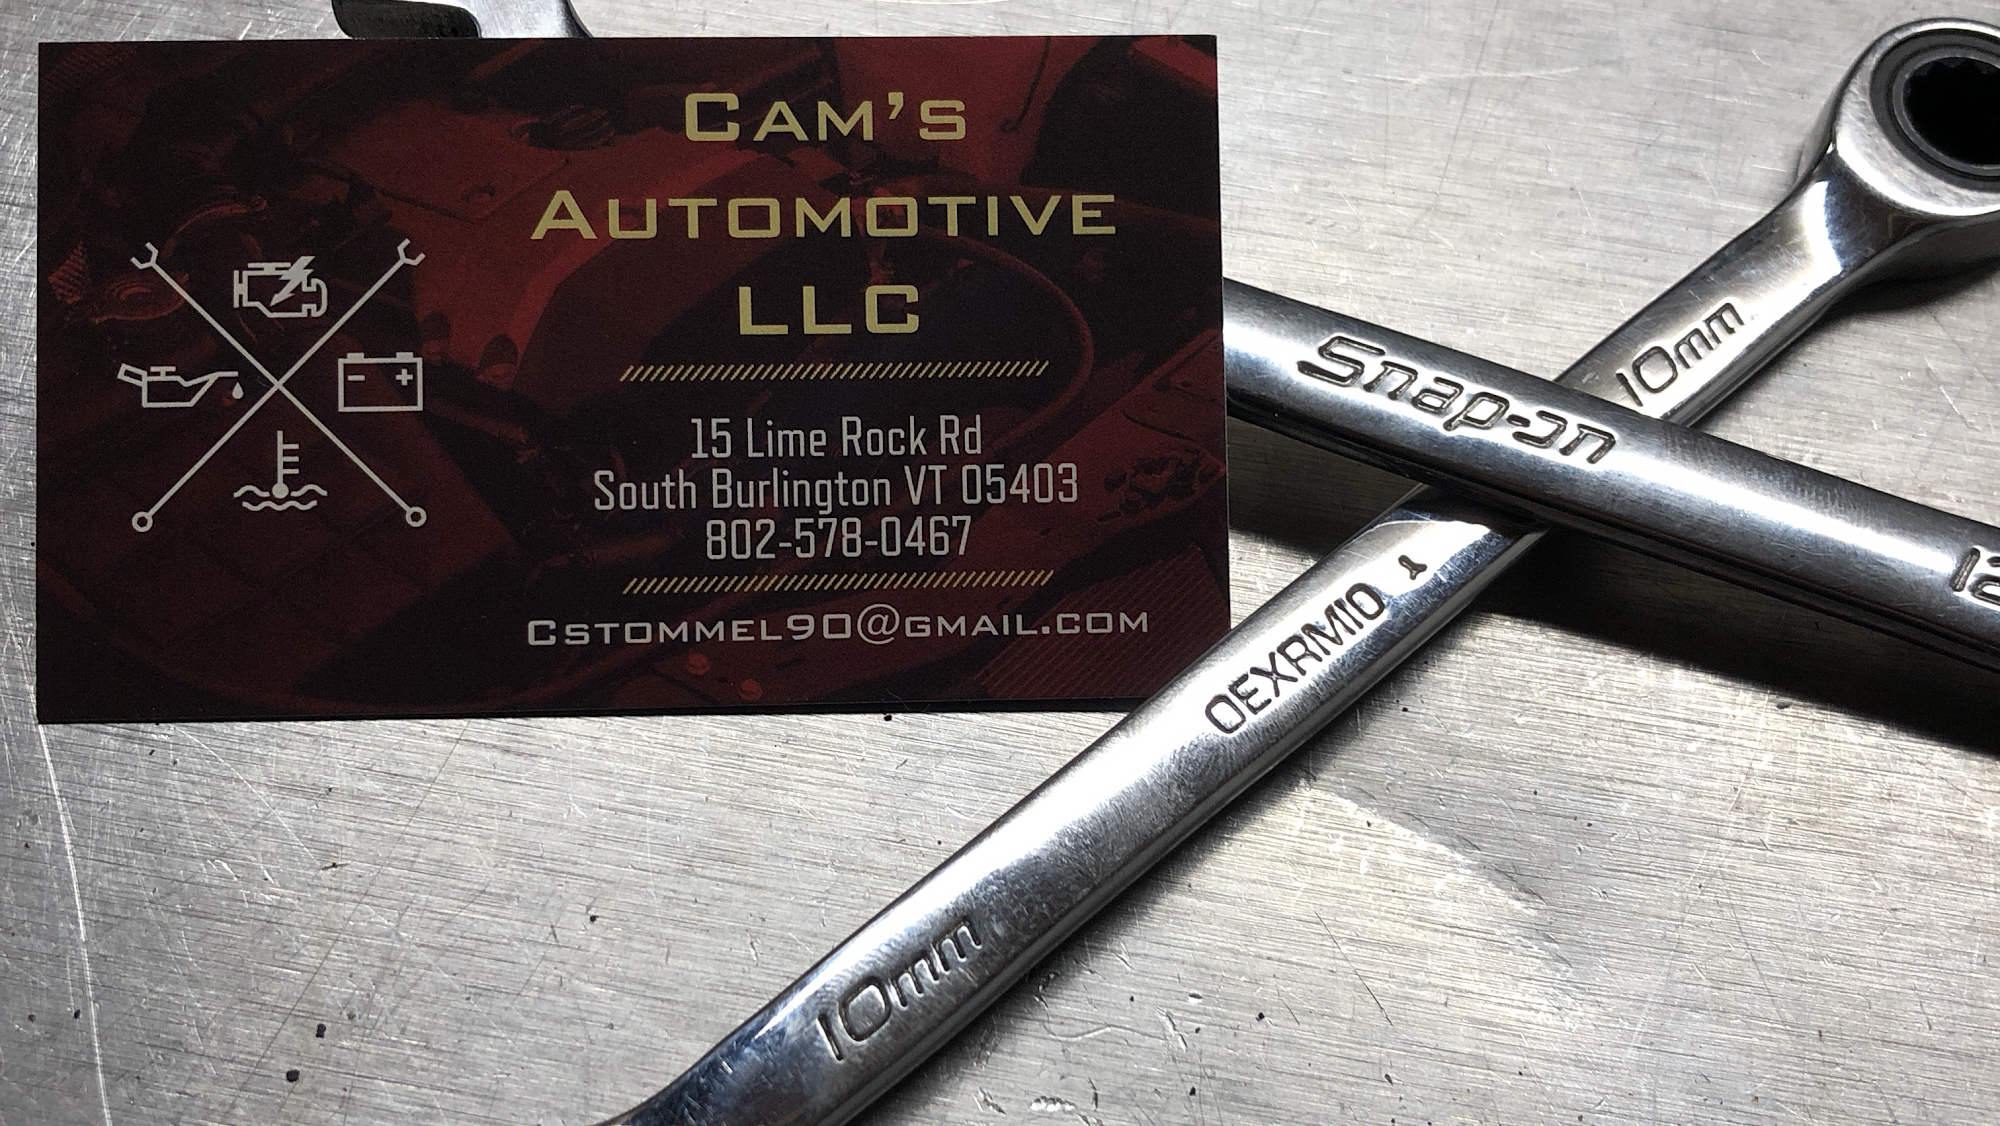 Cam’s Automotive